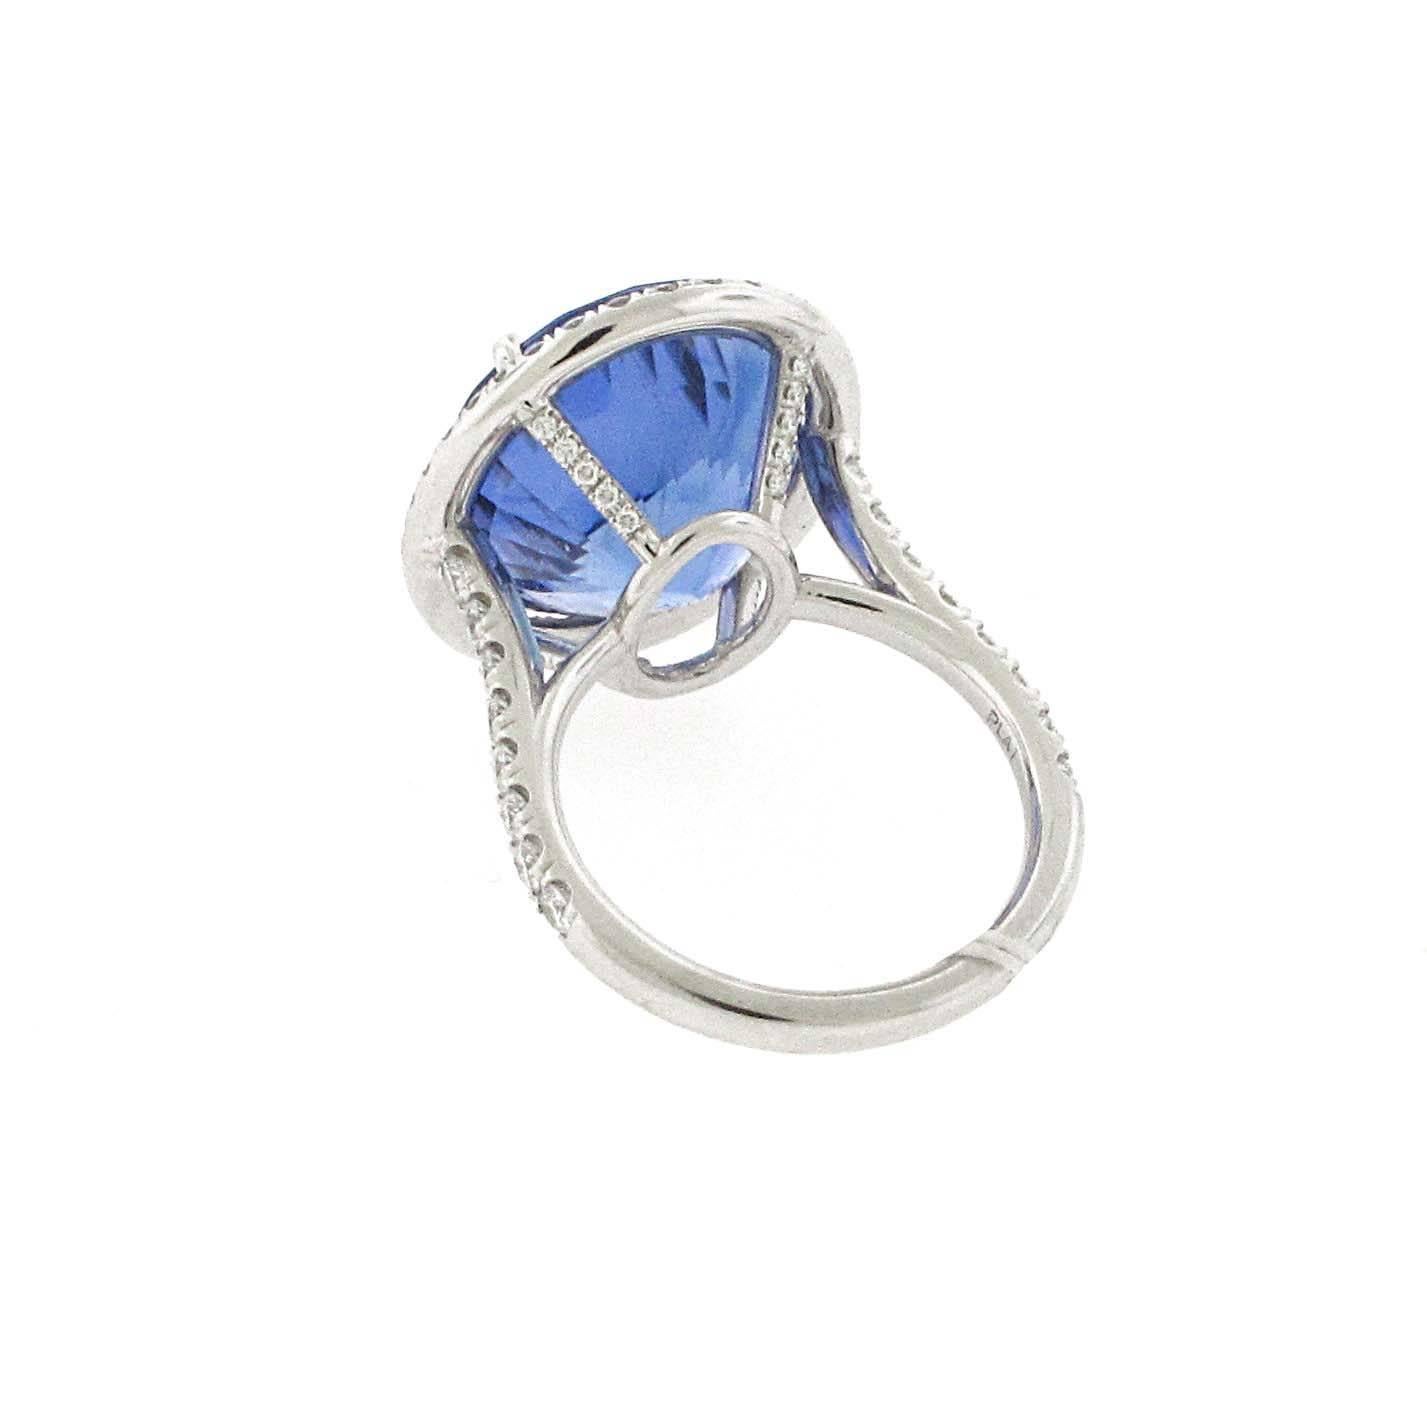 Oval Cut 19.41 Carat Ceylon Heated Sapphire Ring, GIA Certified Sapphire